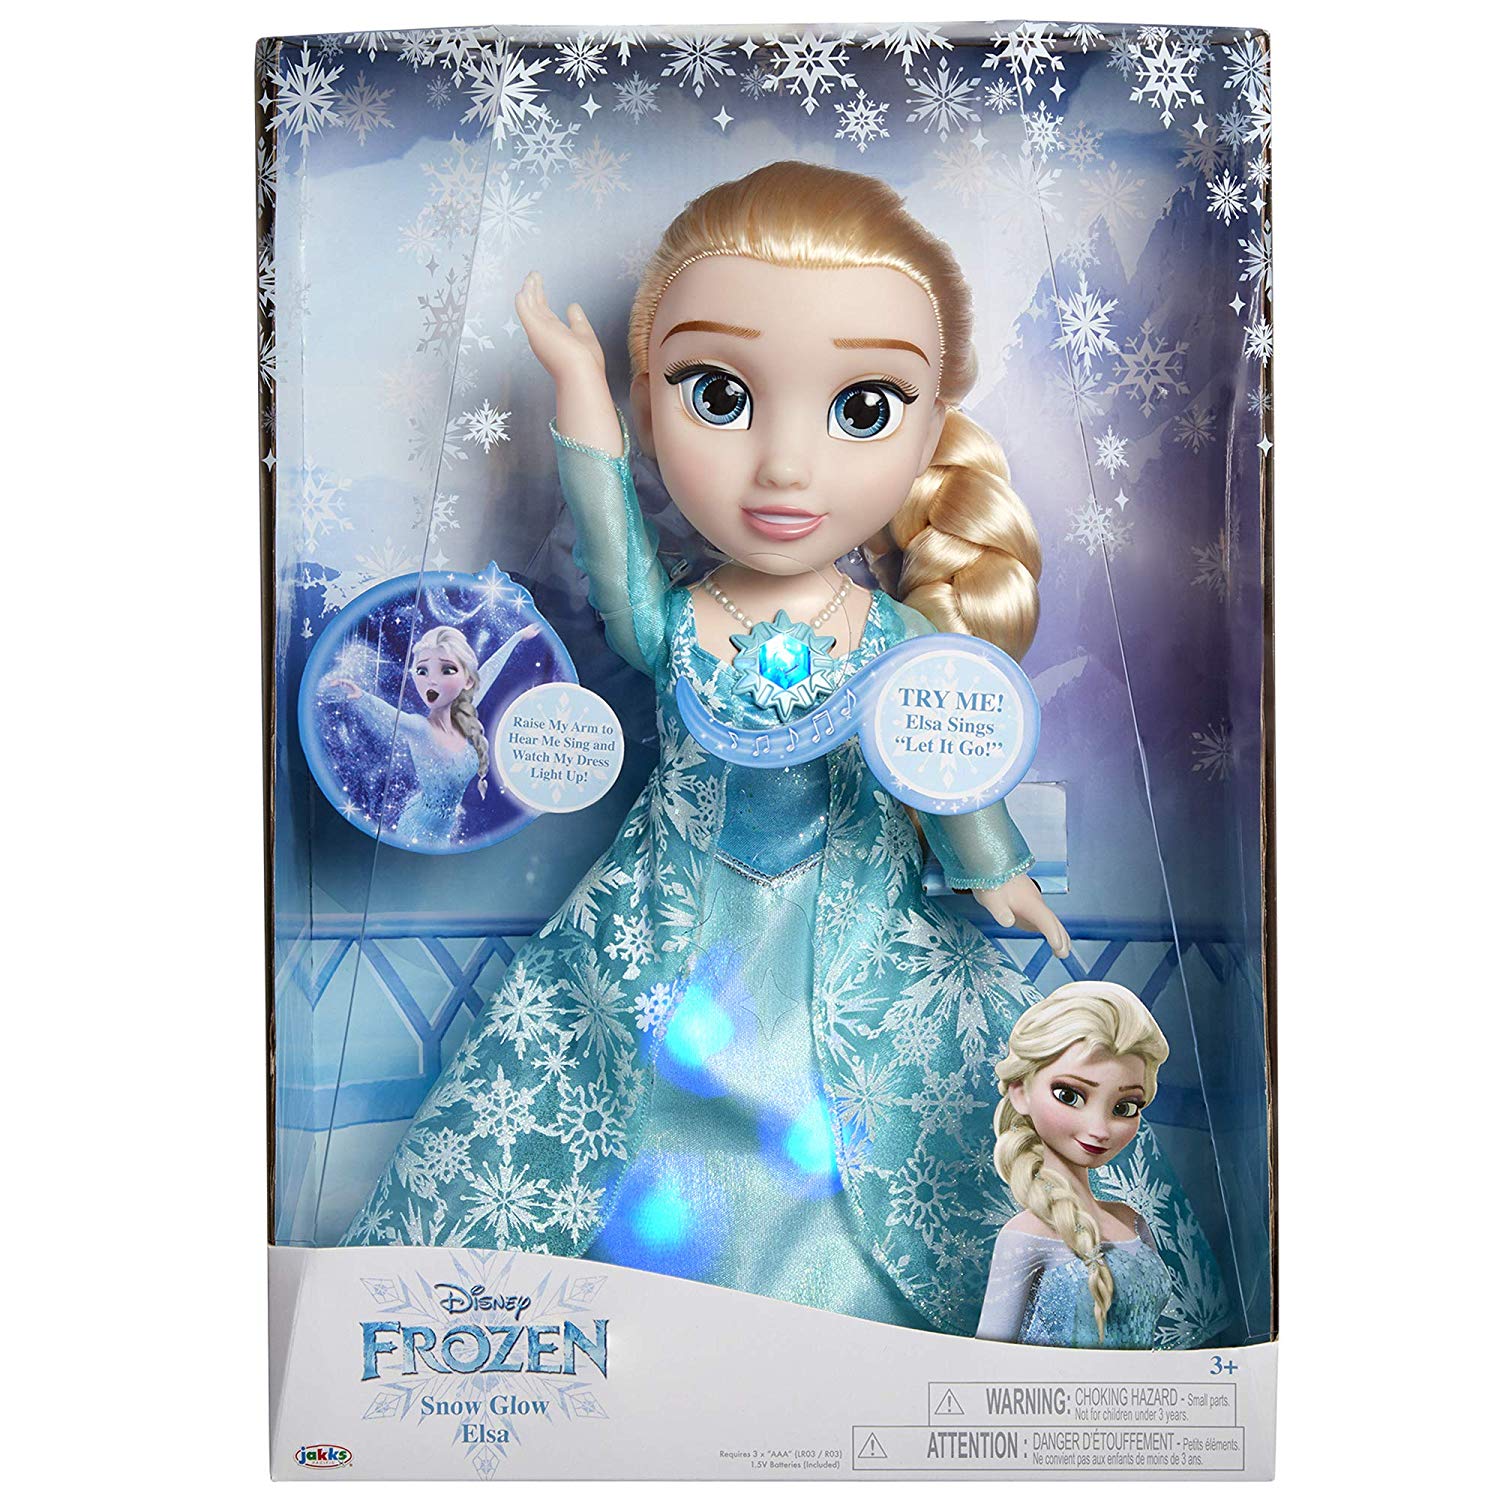 New Batteries Let It Go Snow Princess Disney Frozen Singing Elsa Doll 